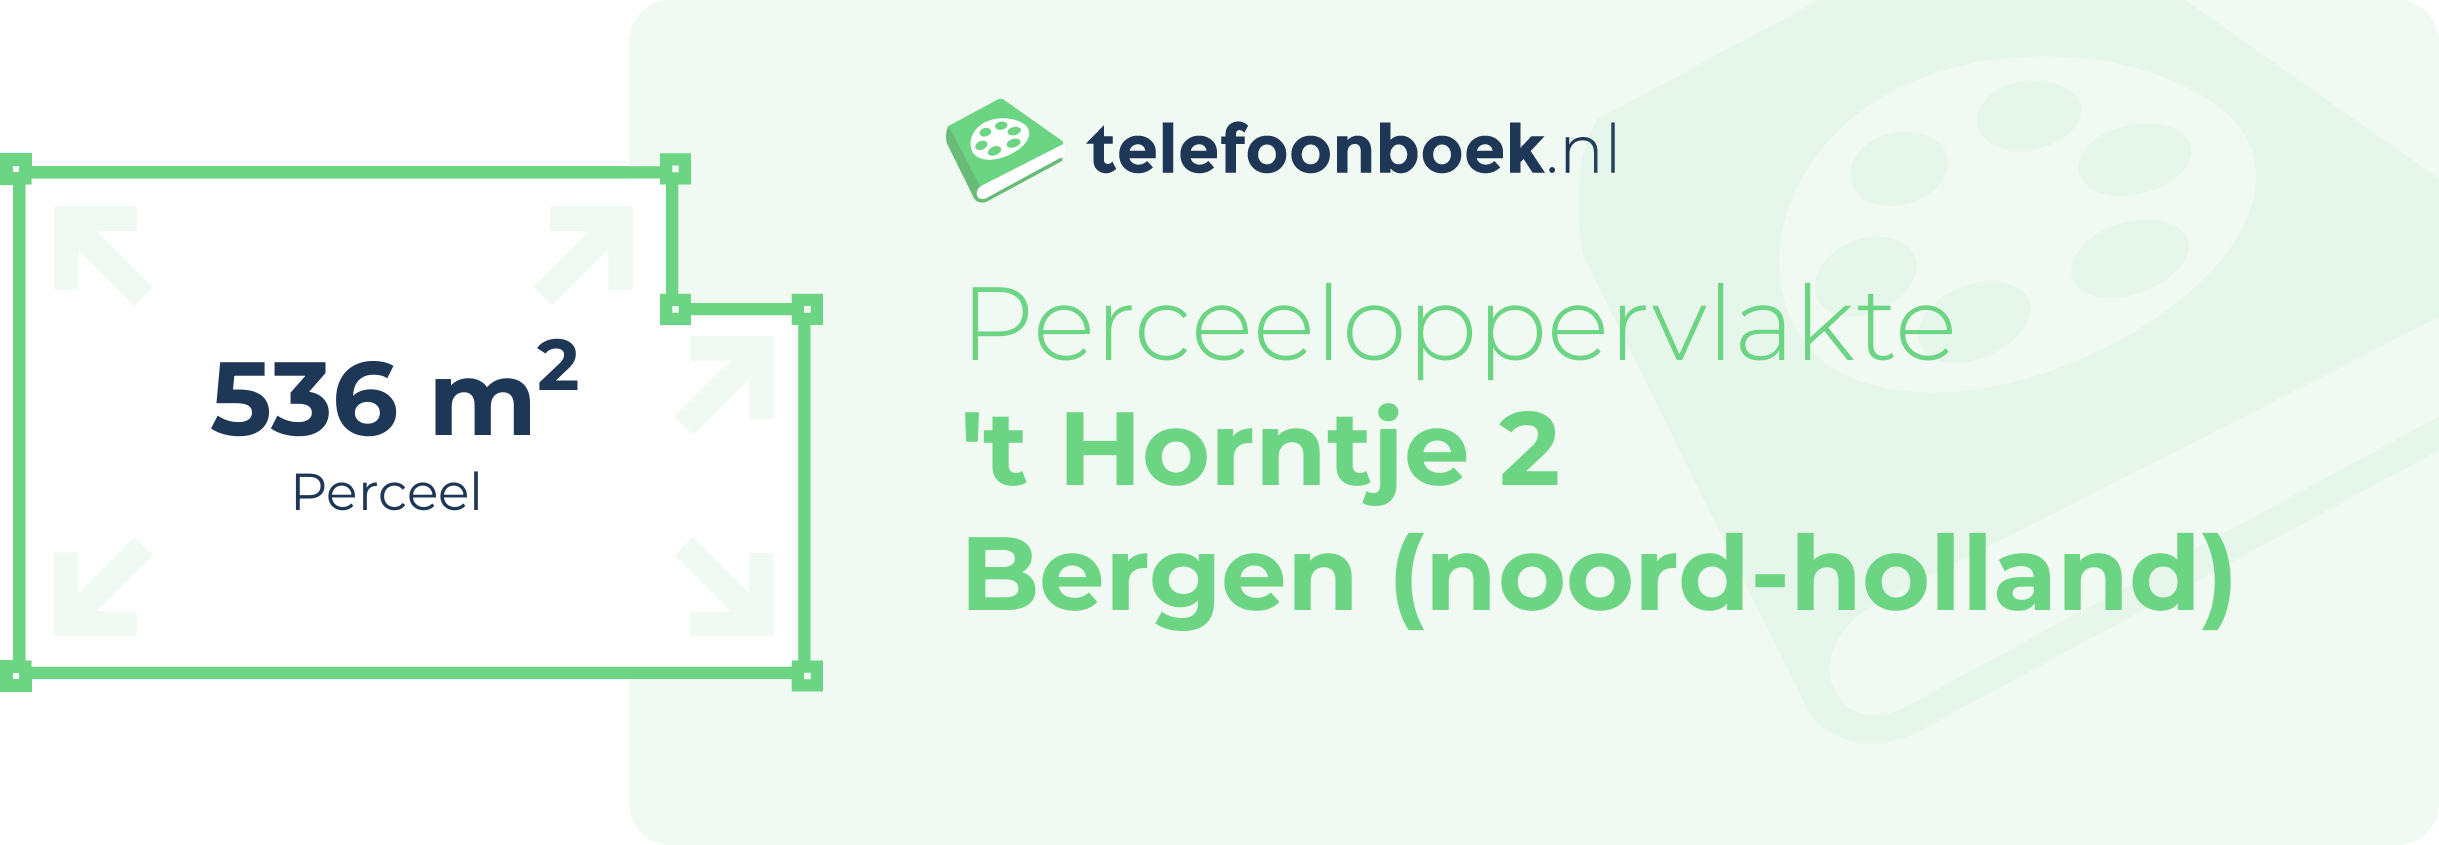 Perceeloppervlakte 't Horntje 2 Bergen (Noord-Holland)